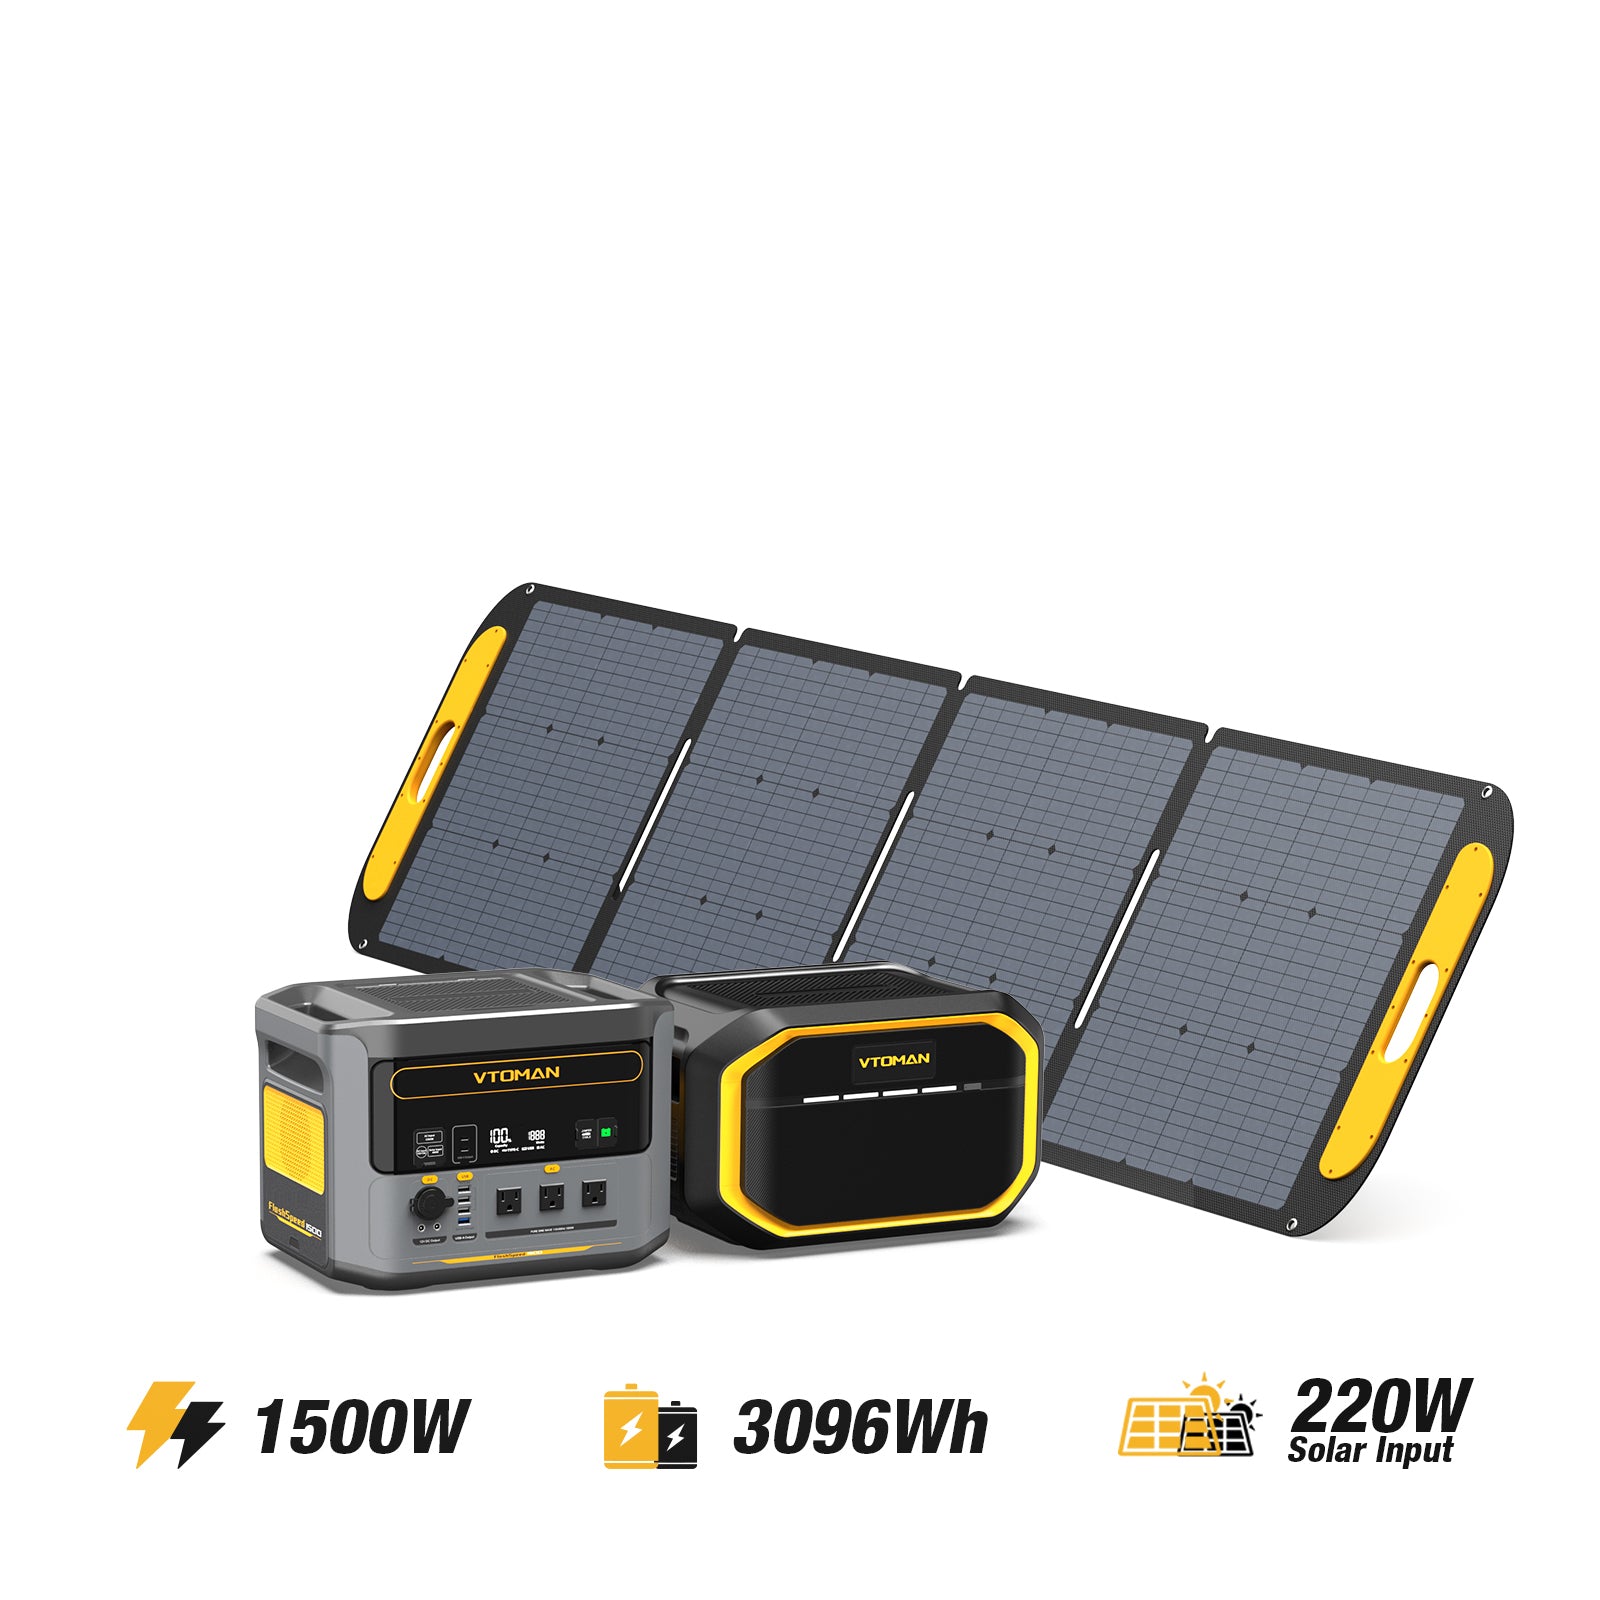 FlashSpeed 1500W/3096Wh 220W Solar Generator